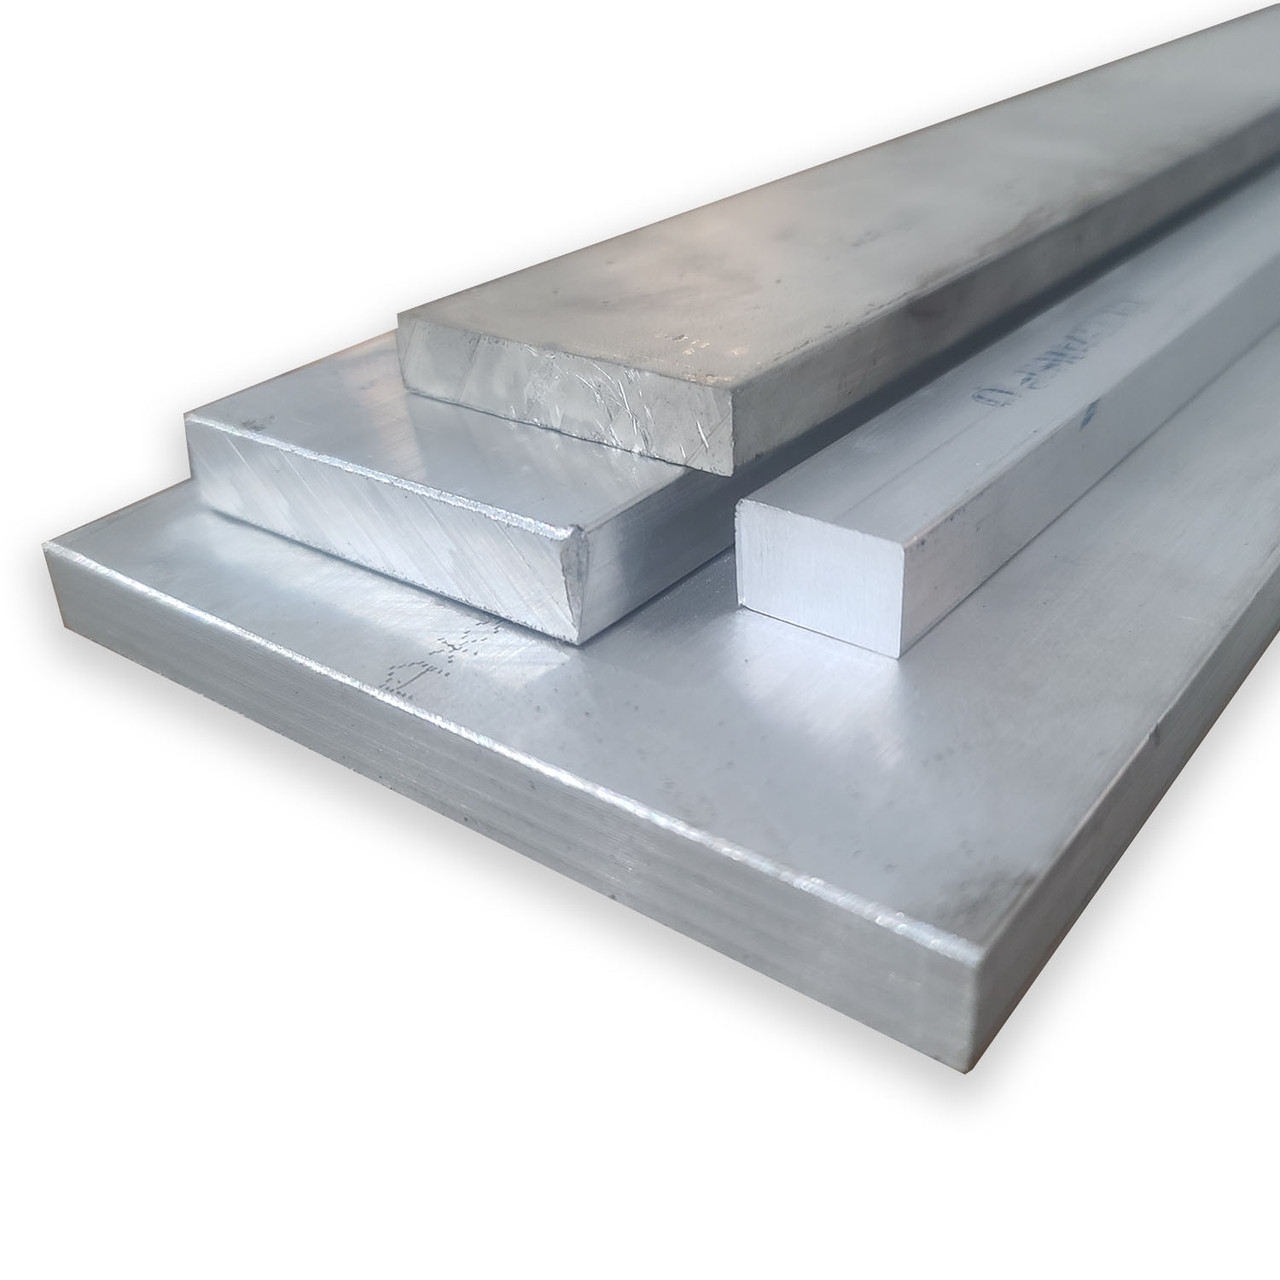 0.750" x 2" x 48", 6061-T6511 Aluminum Flat Bar